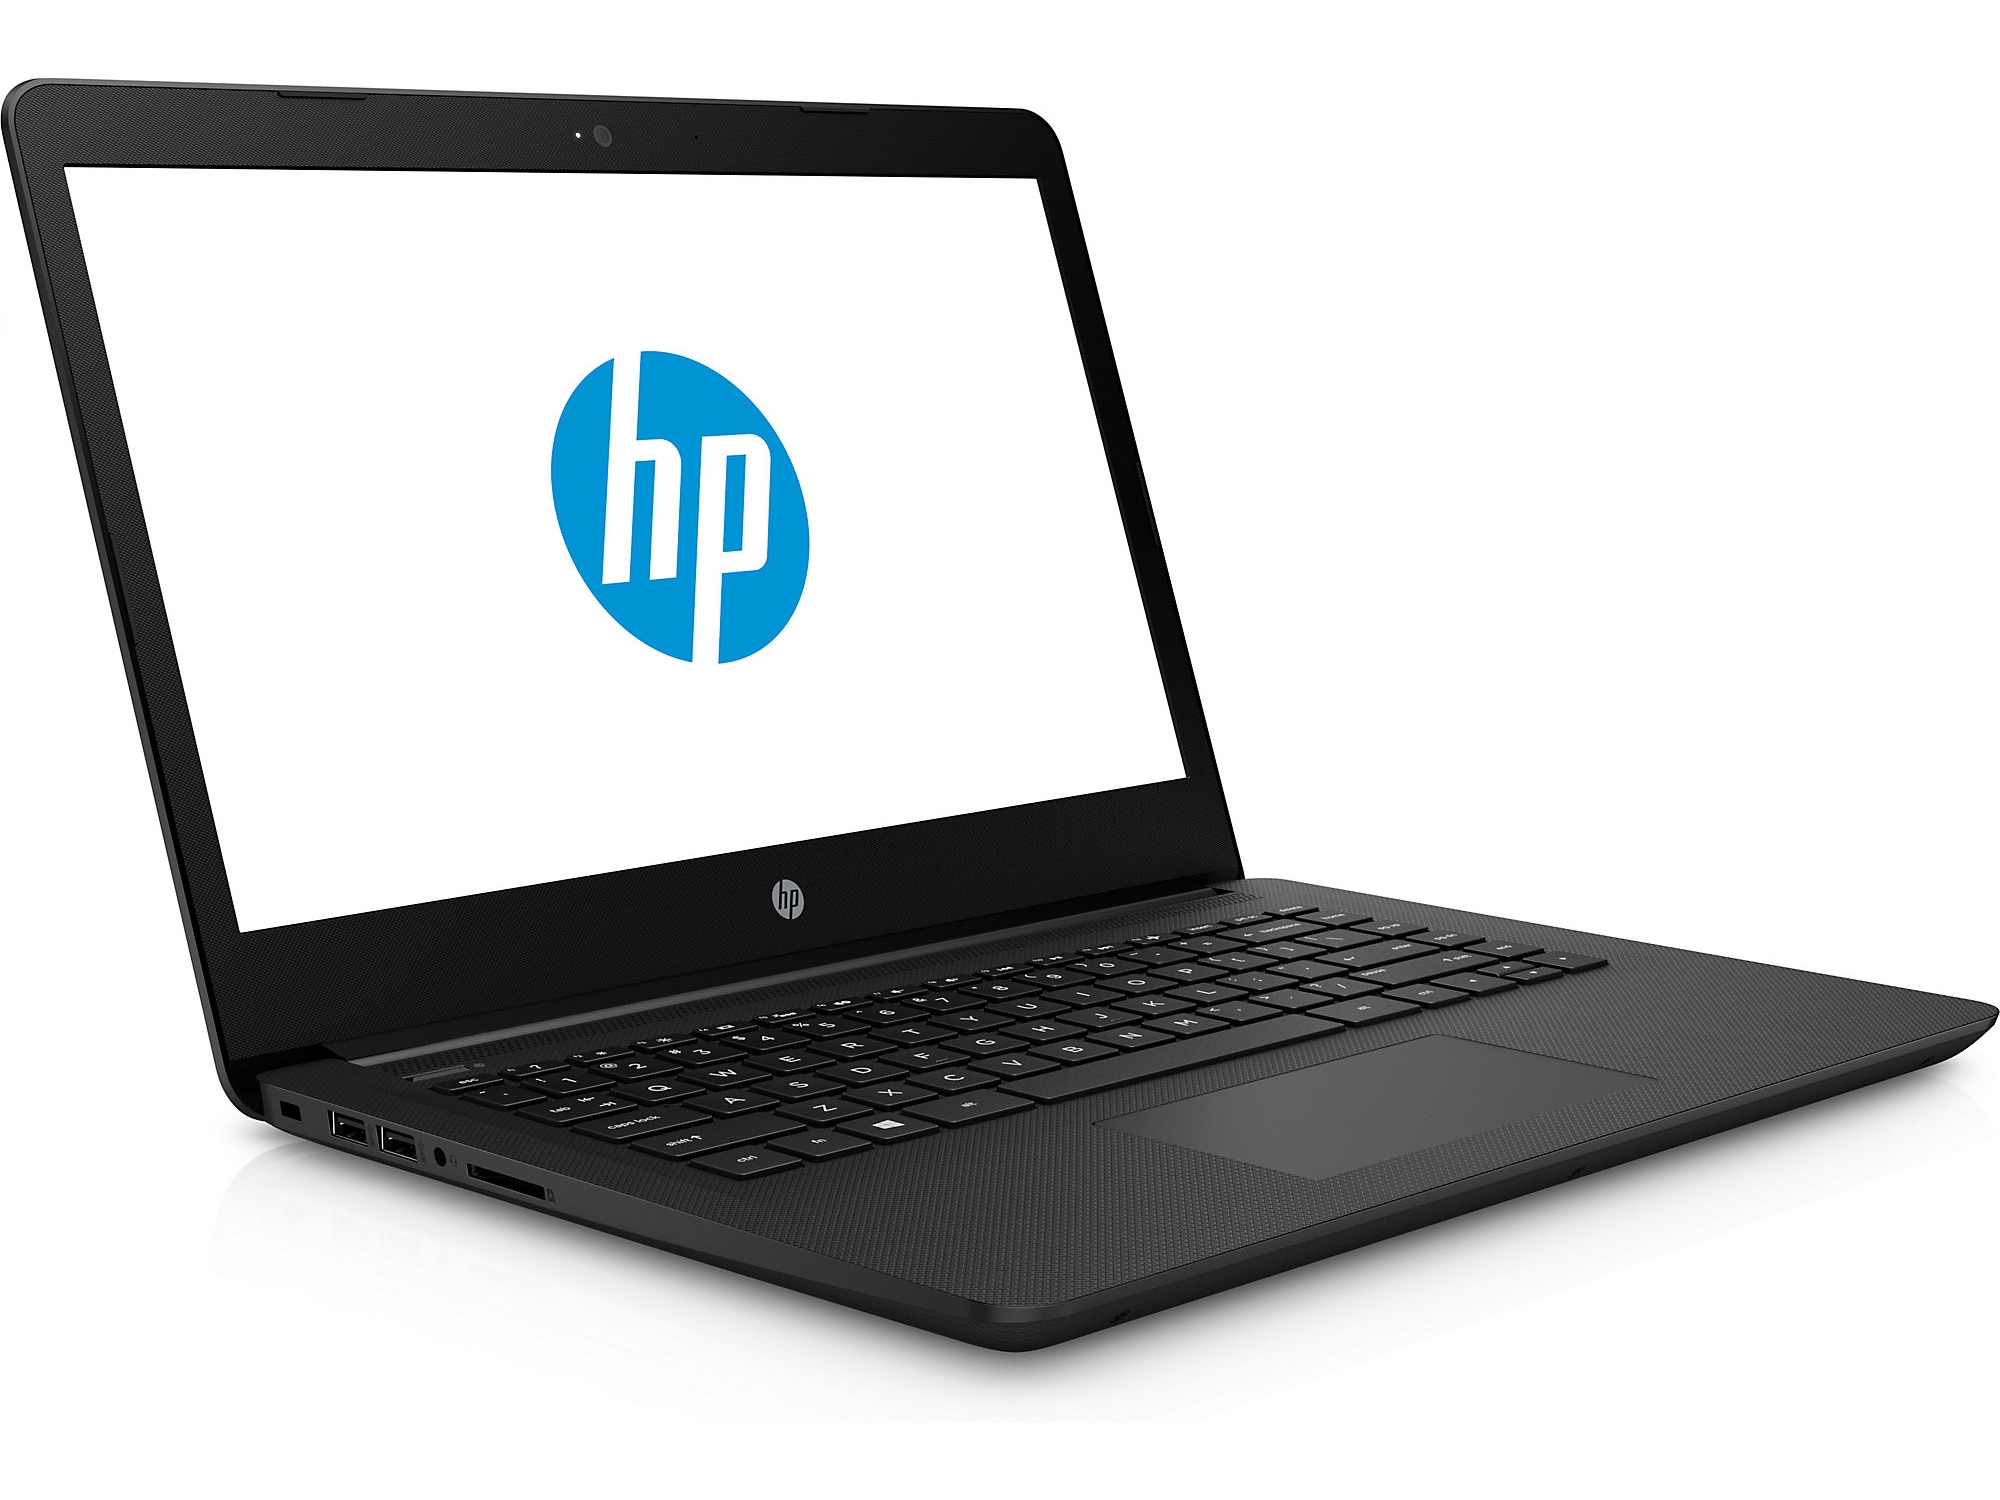 HP 14 (N3710, HD405) Laptop Review - NotebookCheck.net Reviews